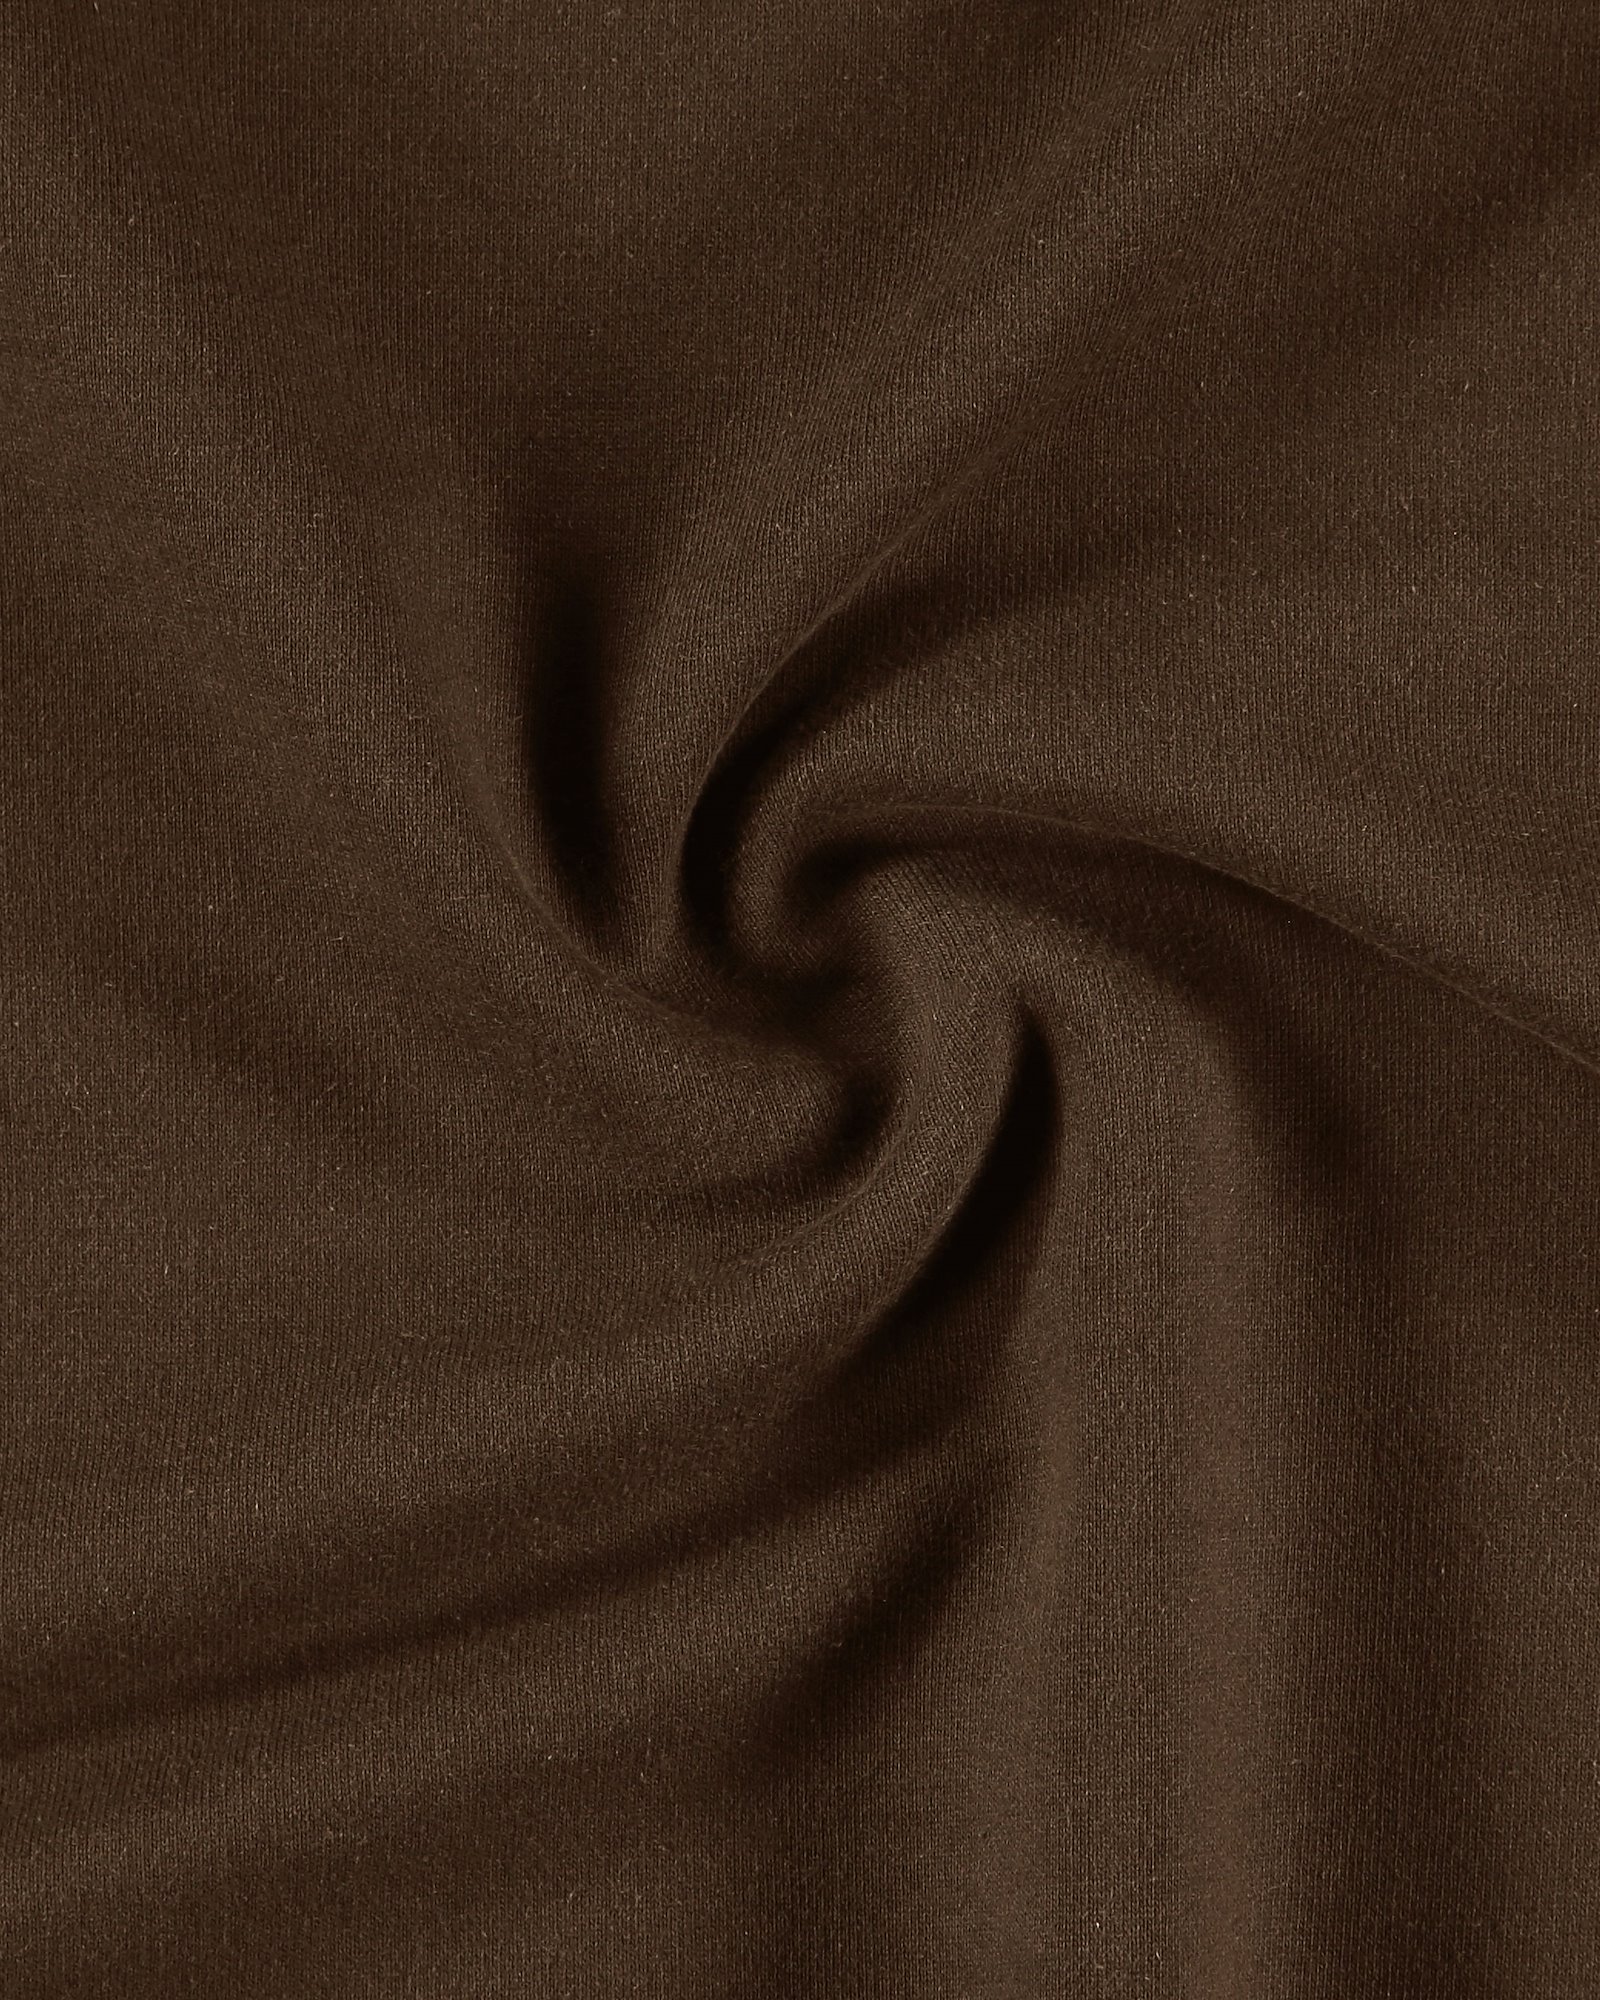 Organic kraftig sweatshirt mörkbrun bors 211810_pack